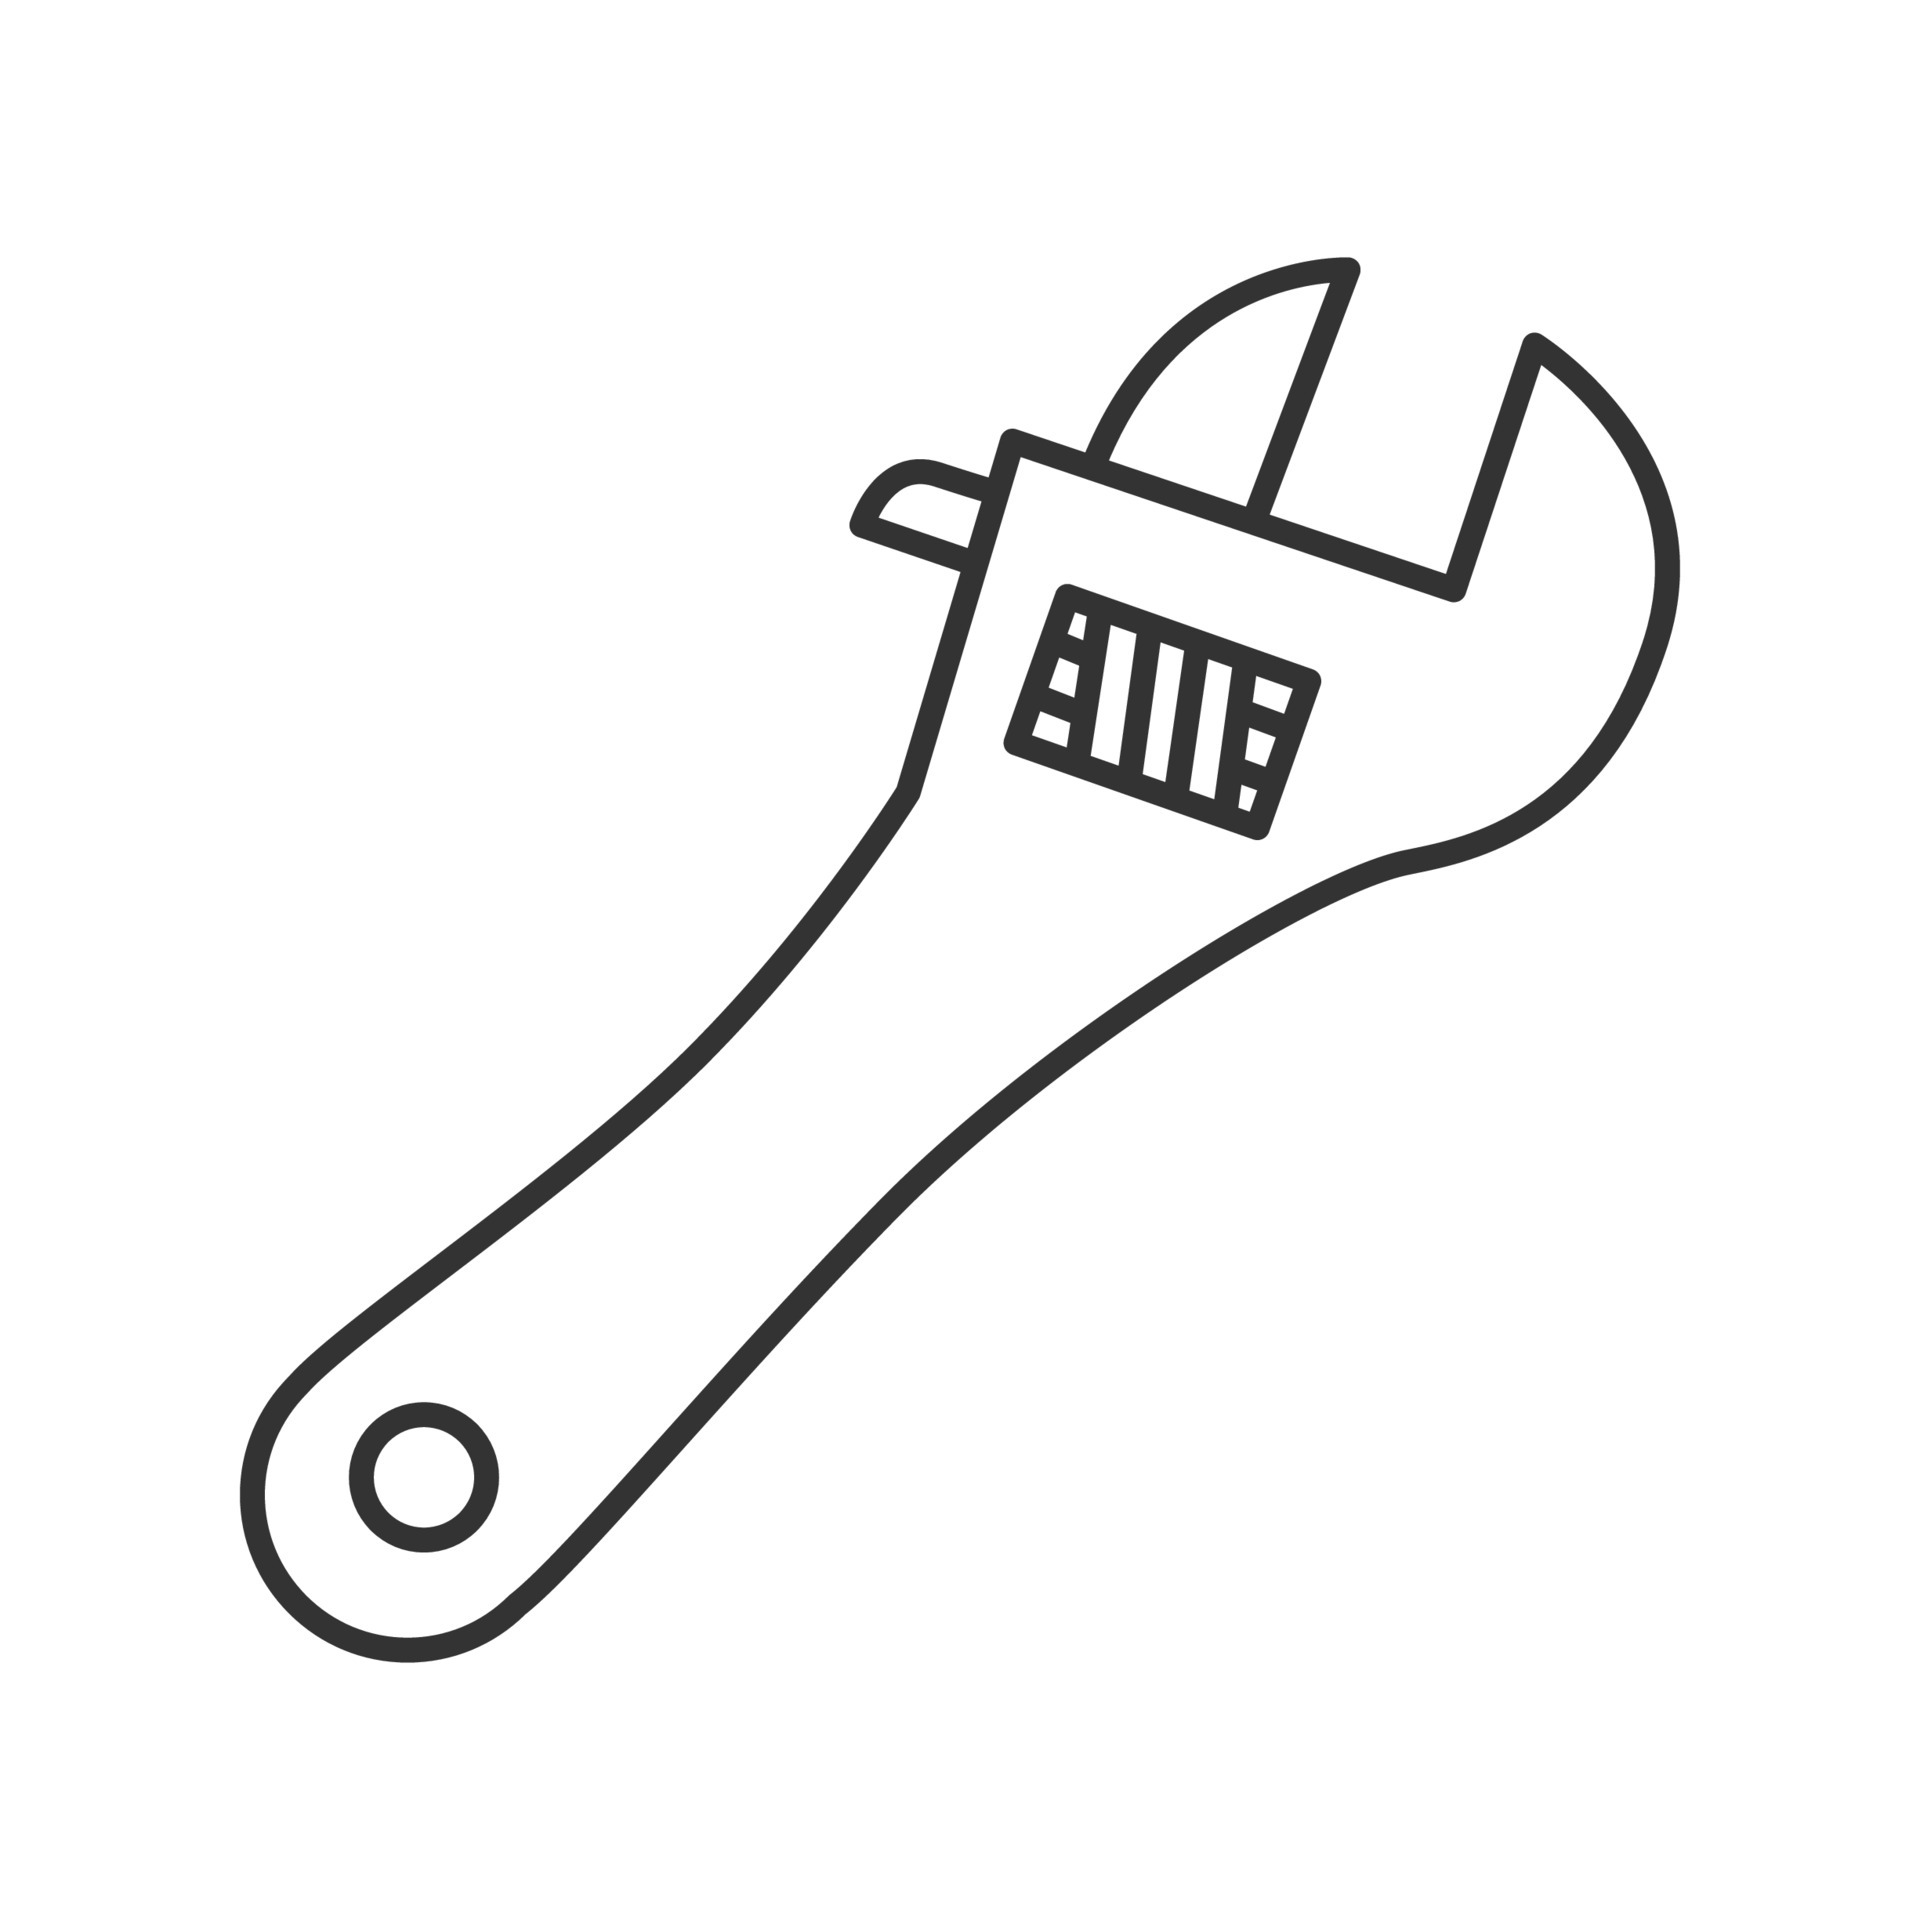 Sketch Illustration Adjustable Wrench Stock Vector Royalty Free 189403271   Shutterstock